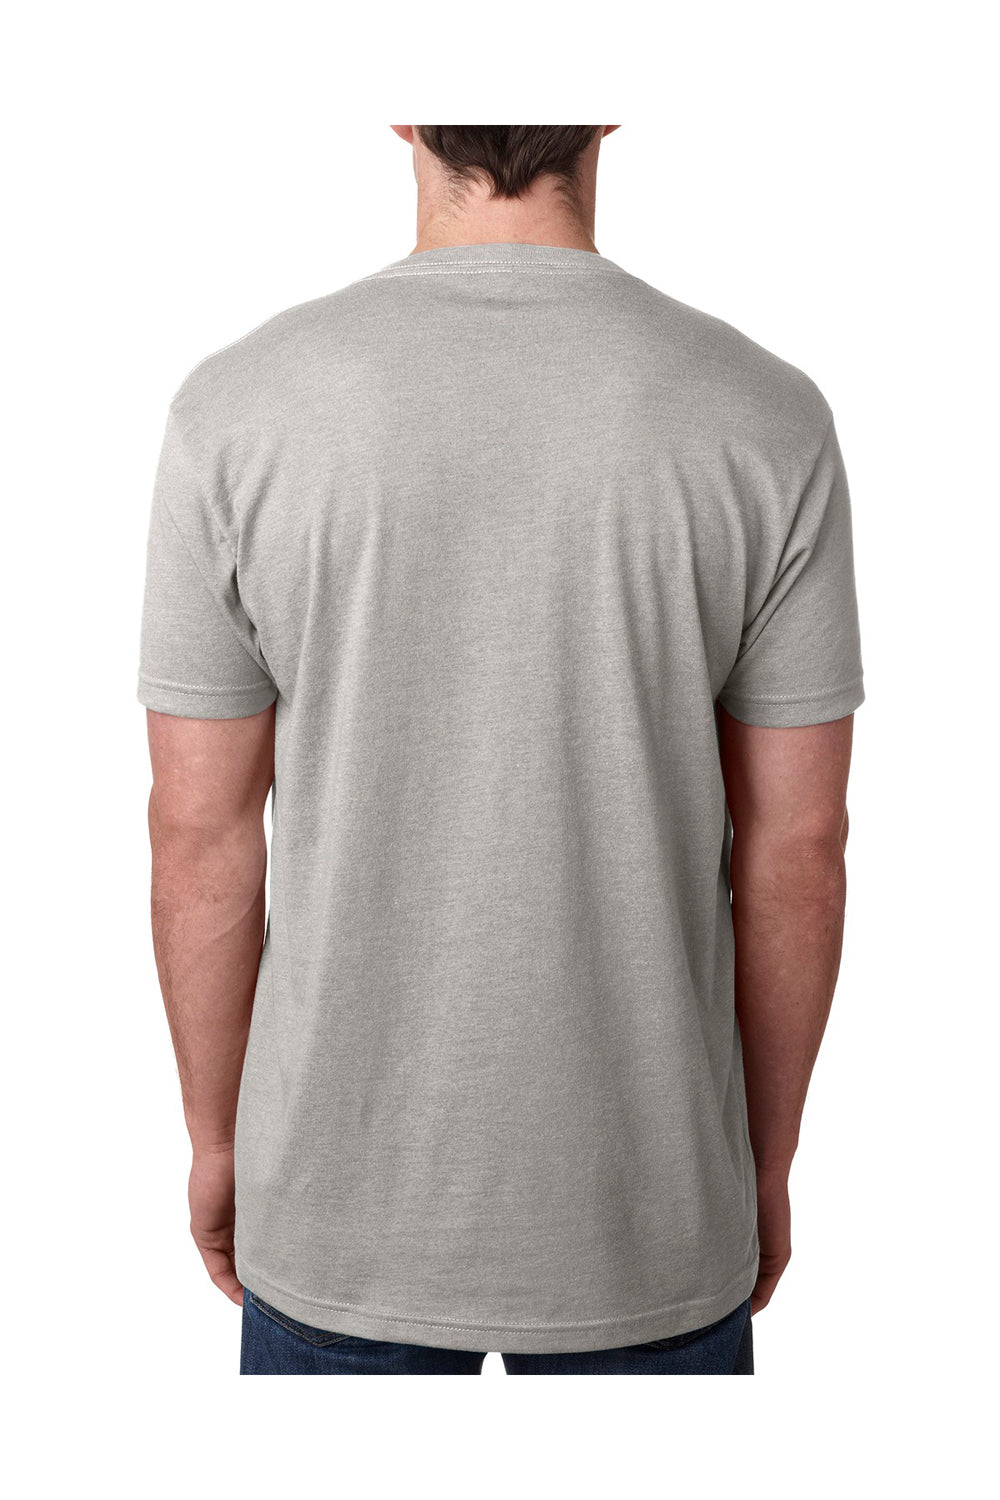 Next Level 6240 Mens CVC Jersey Short Sleeve V-Neck T-Shirt Silk Grey Back